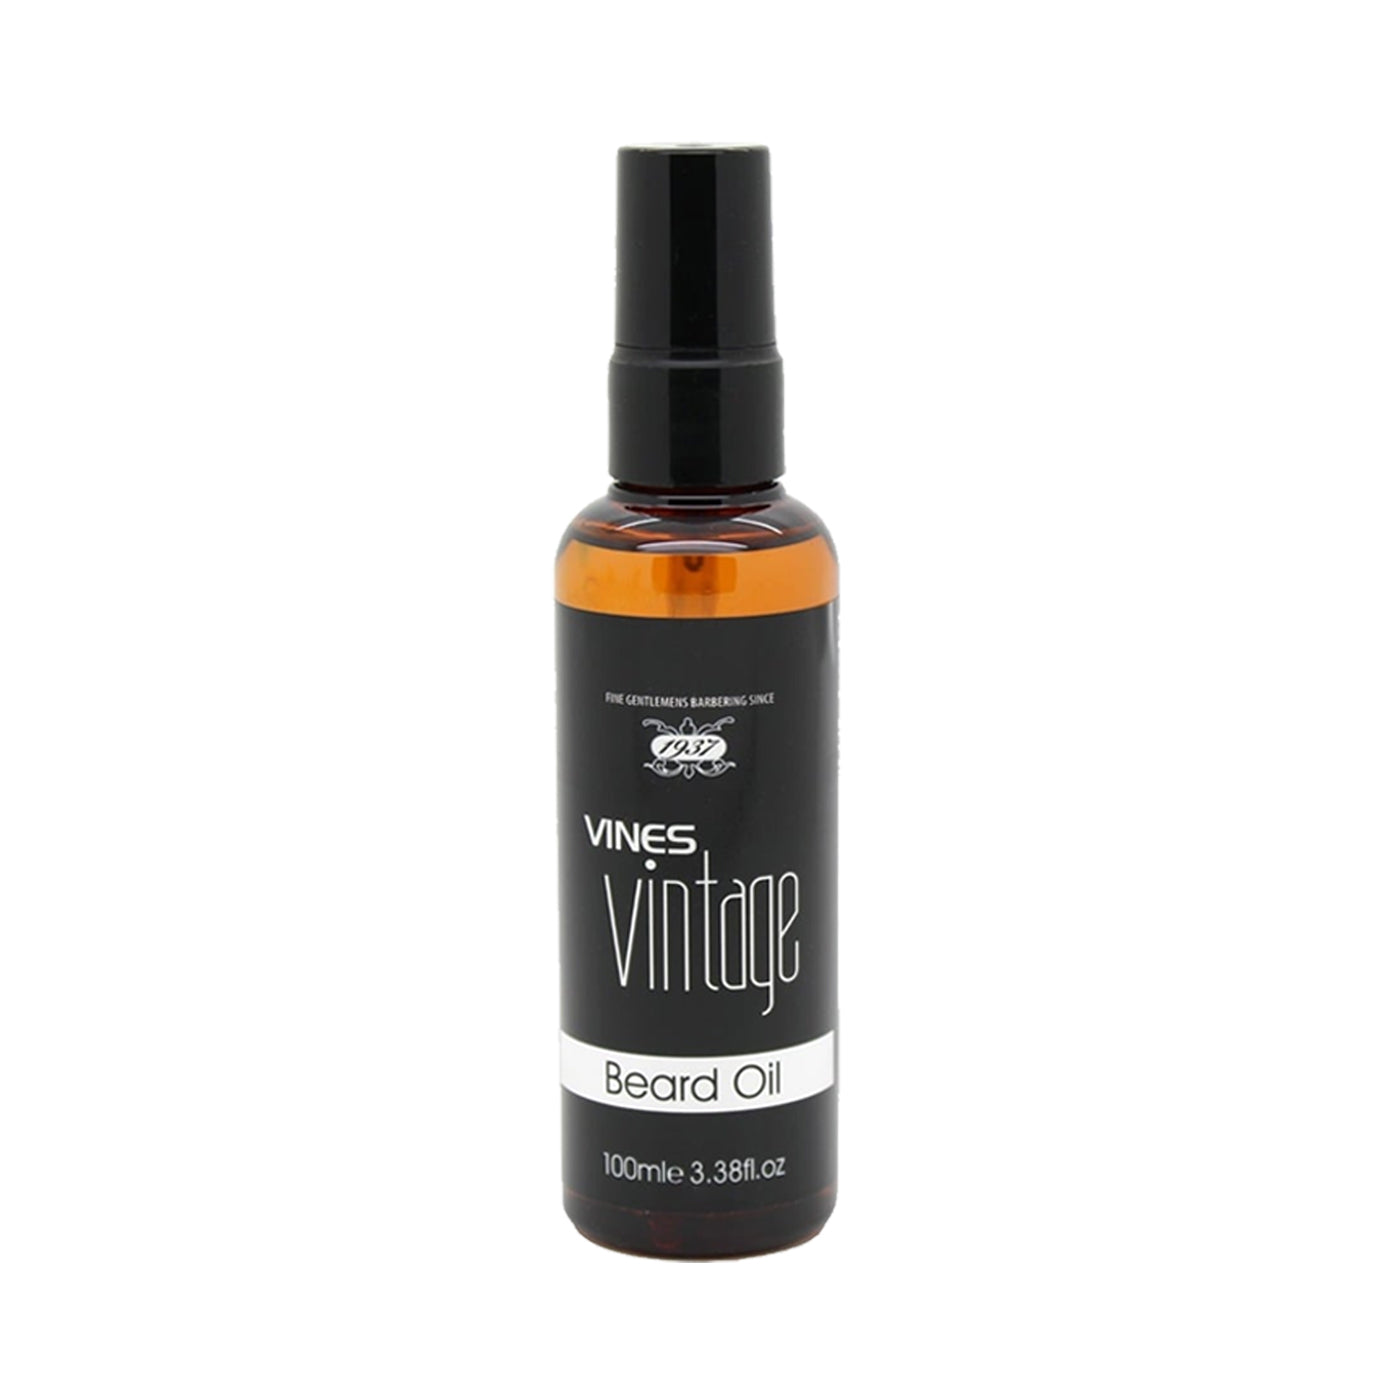 Vines Vintage Beard Oil (100ml) - Ultimate Hair and Beauty